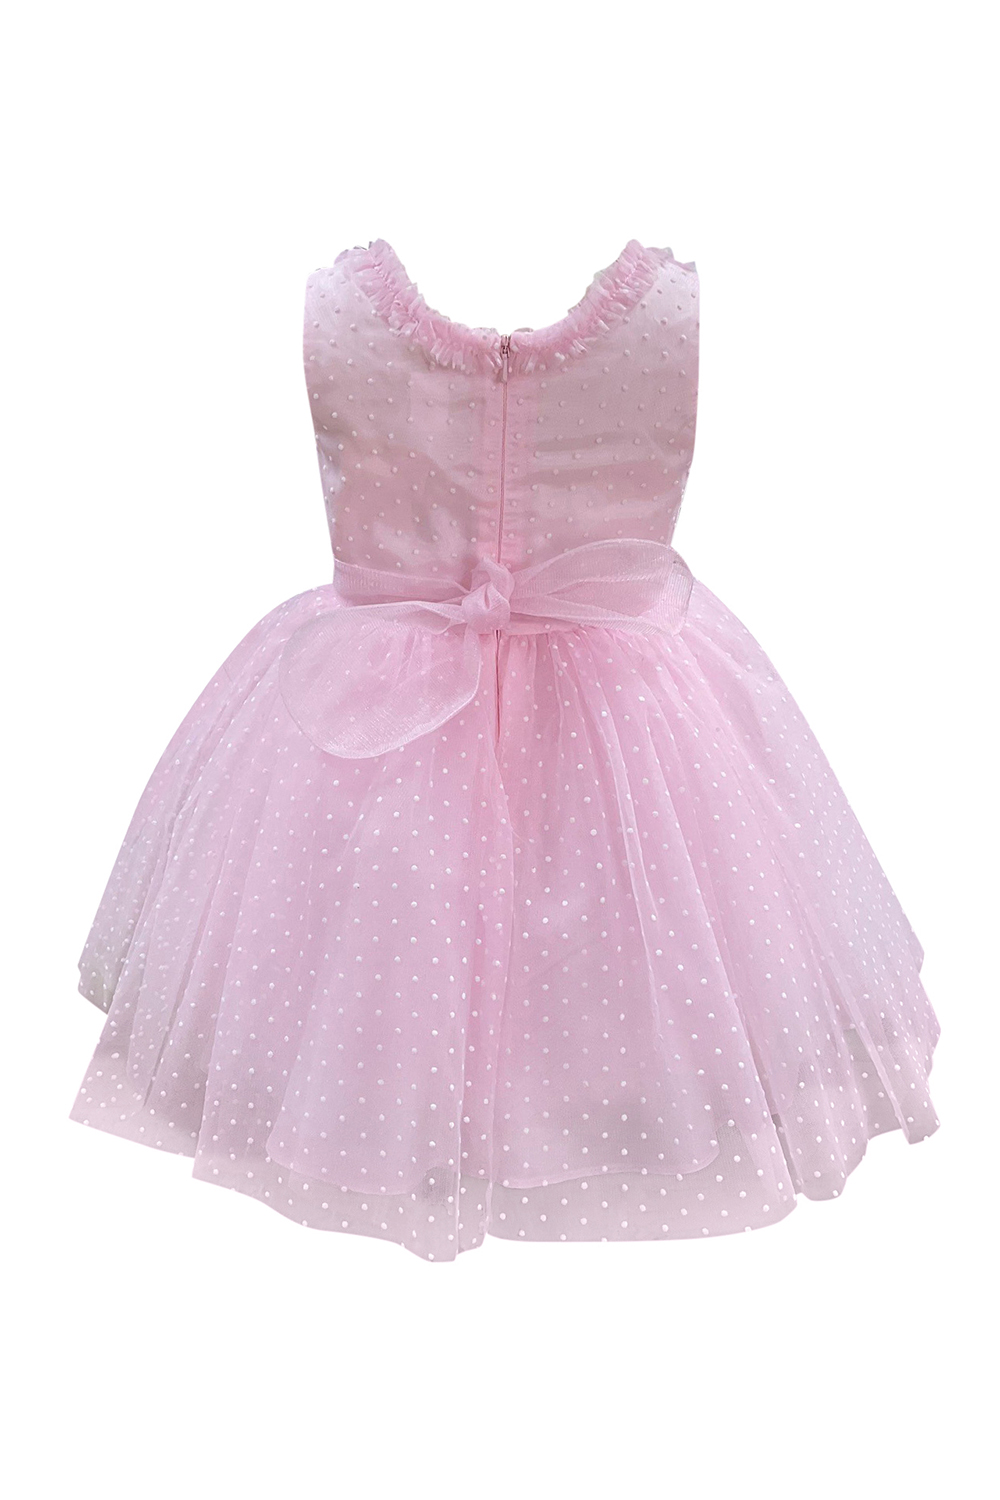 Ballerina Pink Princess Gown